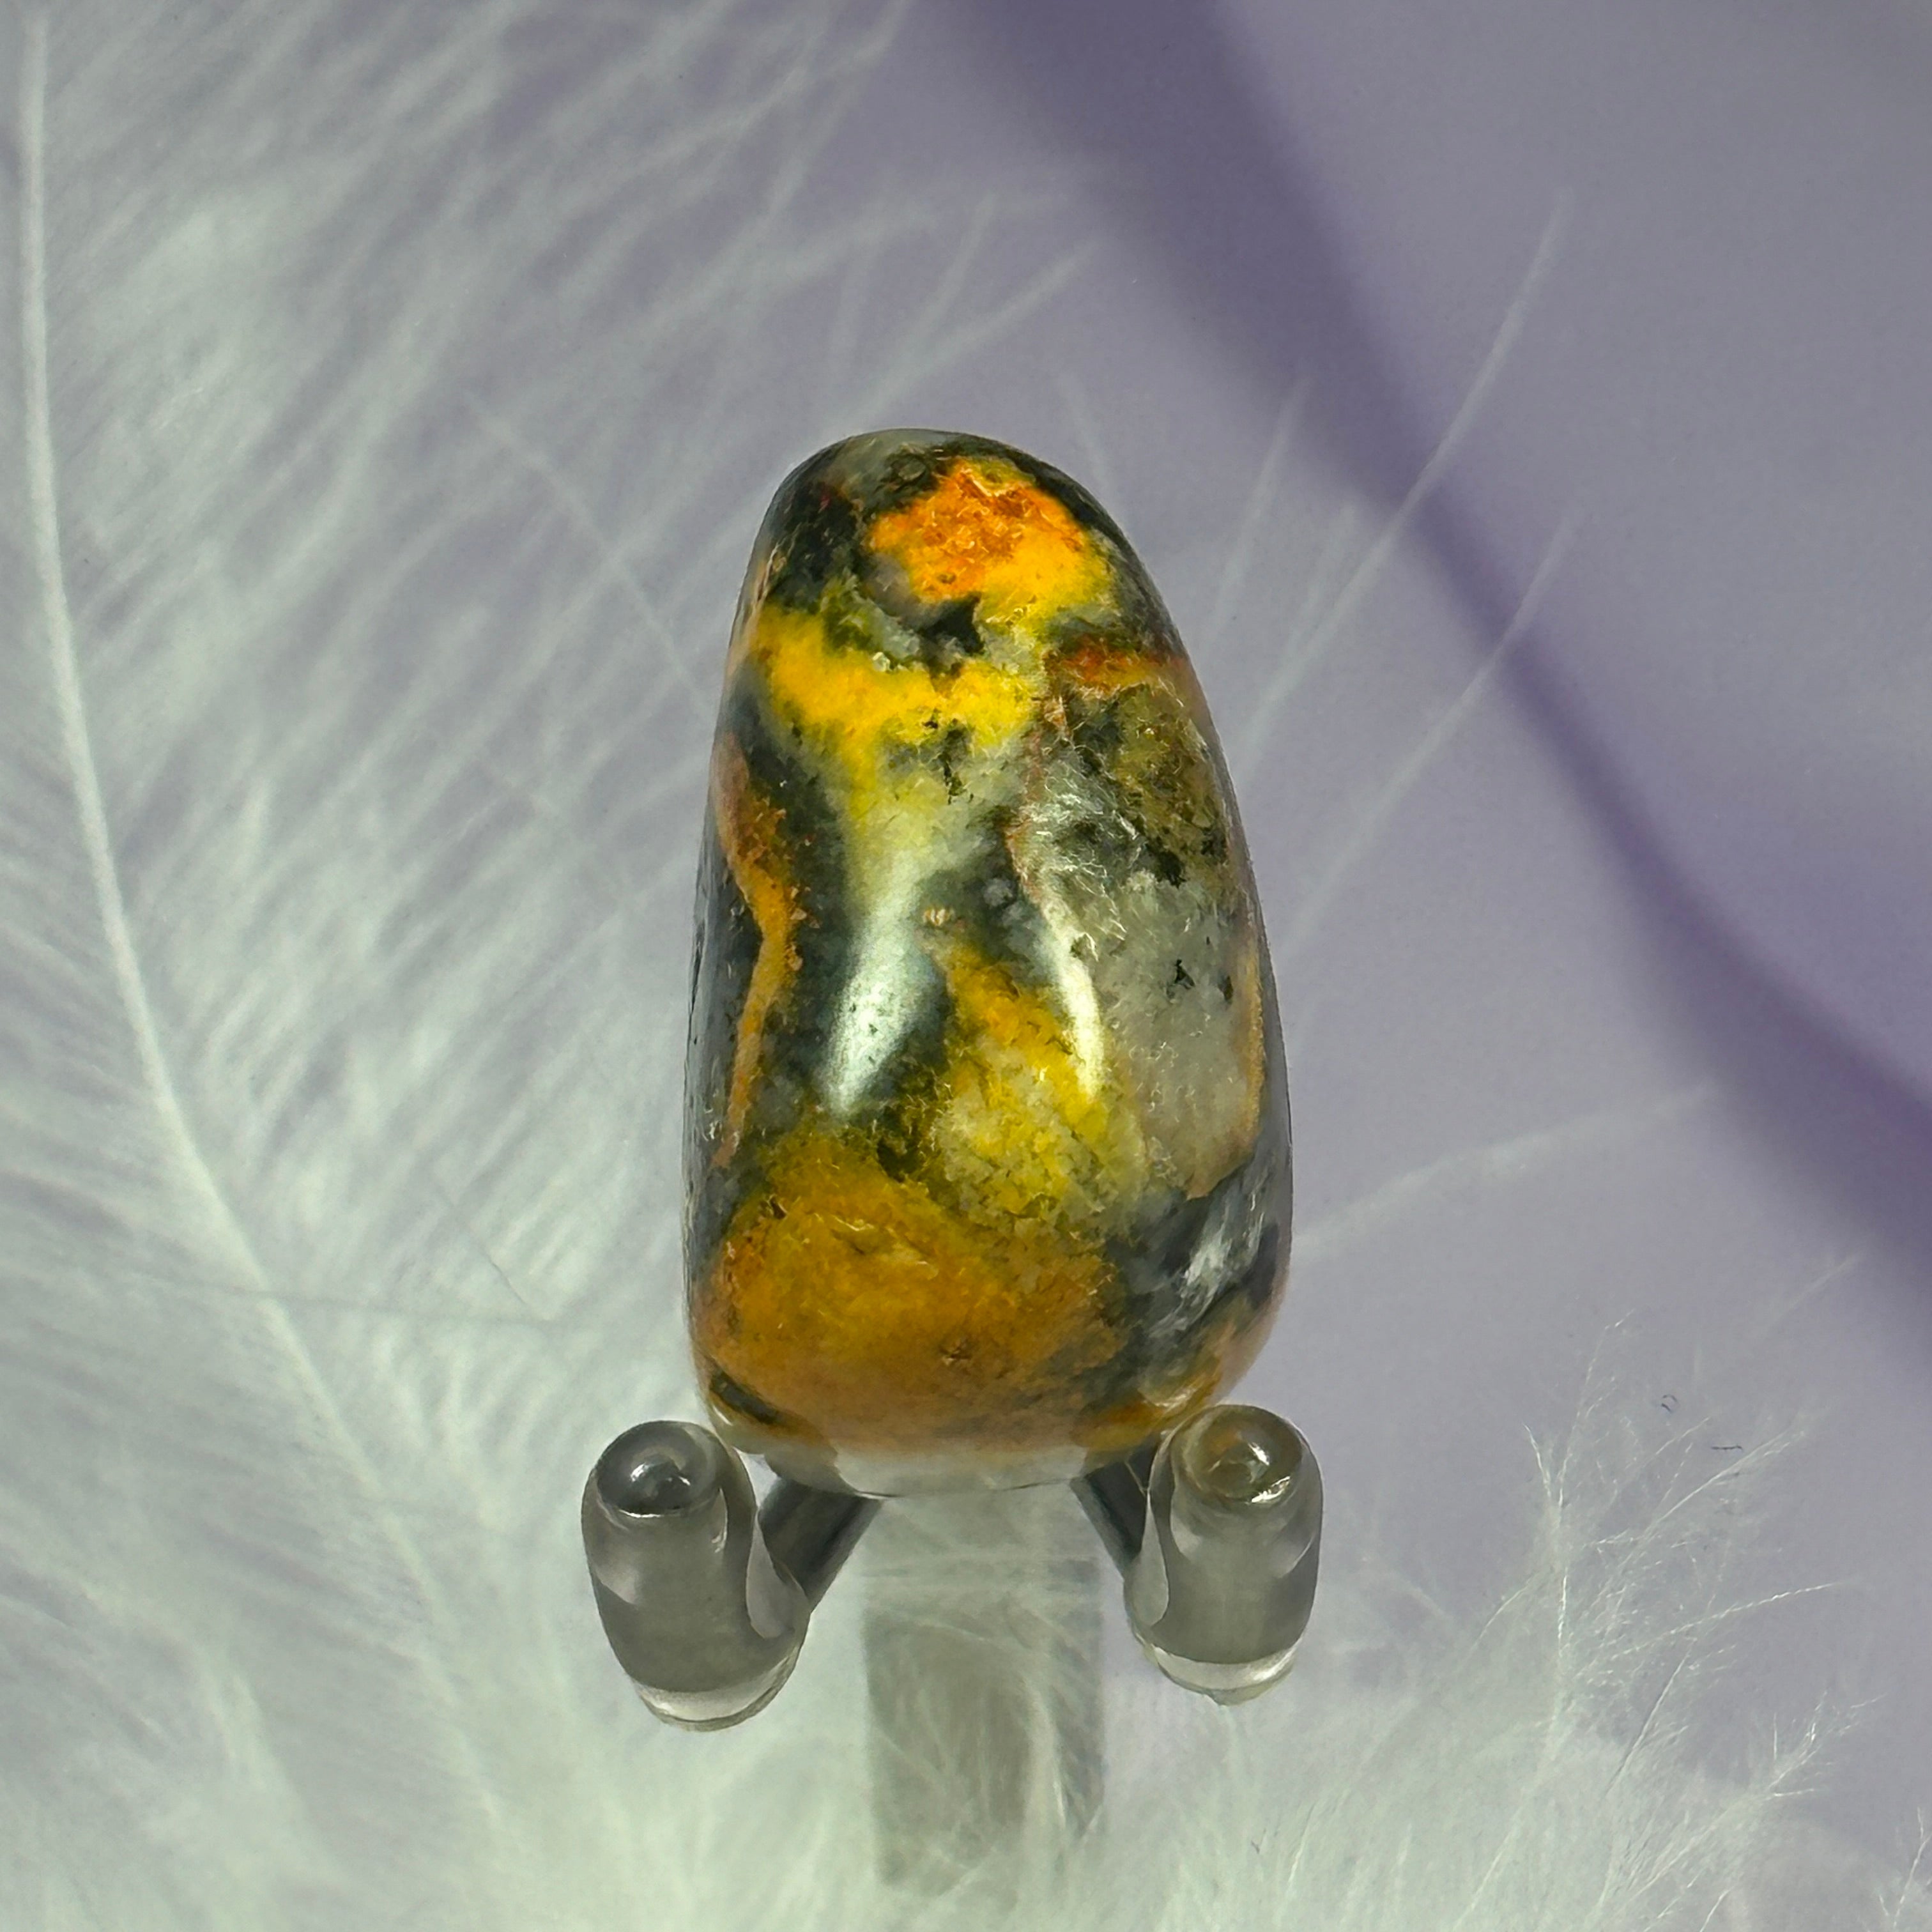 Rare Eclipse Stone tumble stone, Bumblebee Jasper 11.3g SN47857